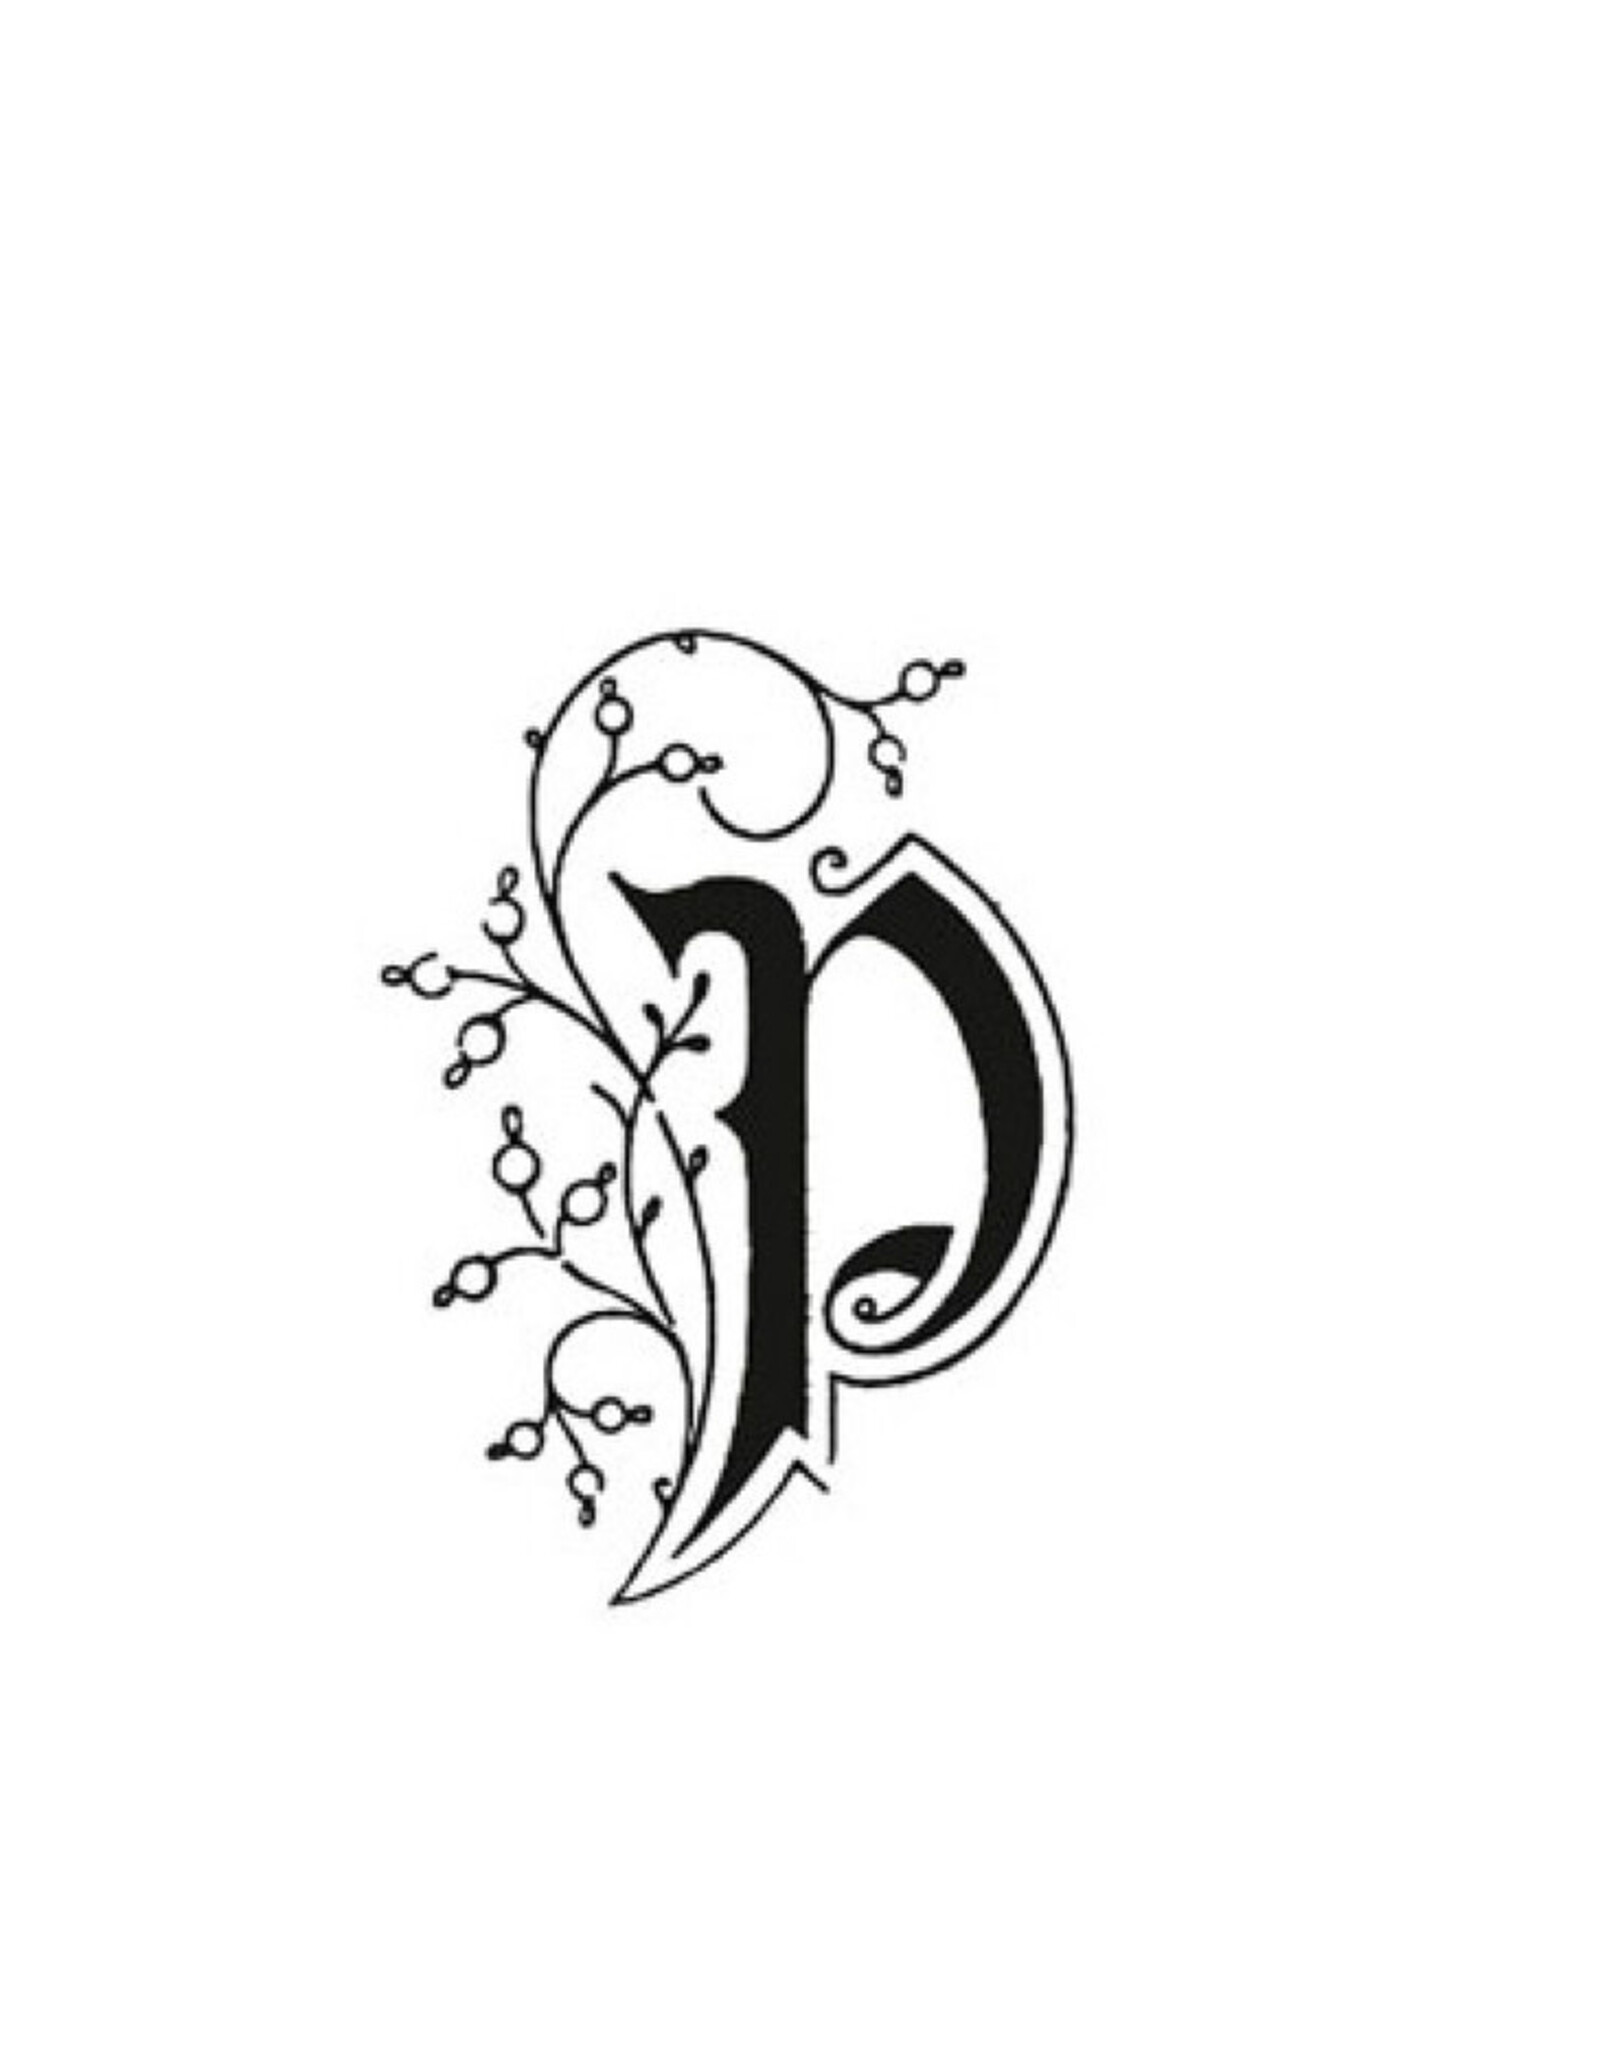 J. Herbin "P" Illuminated Letter Seal + Handle